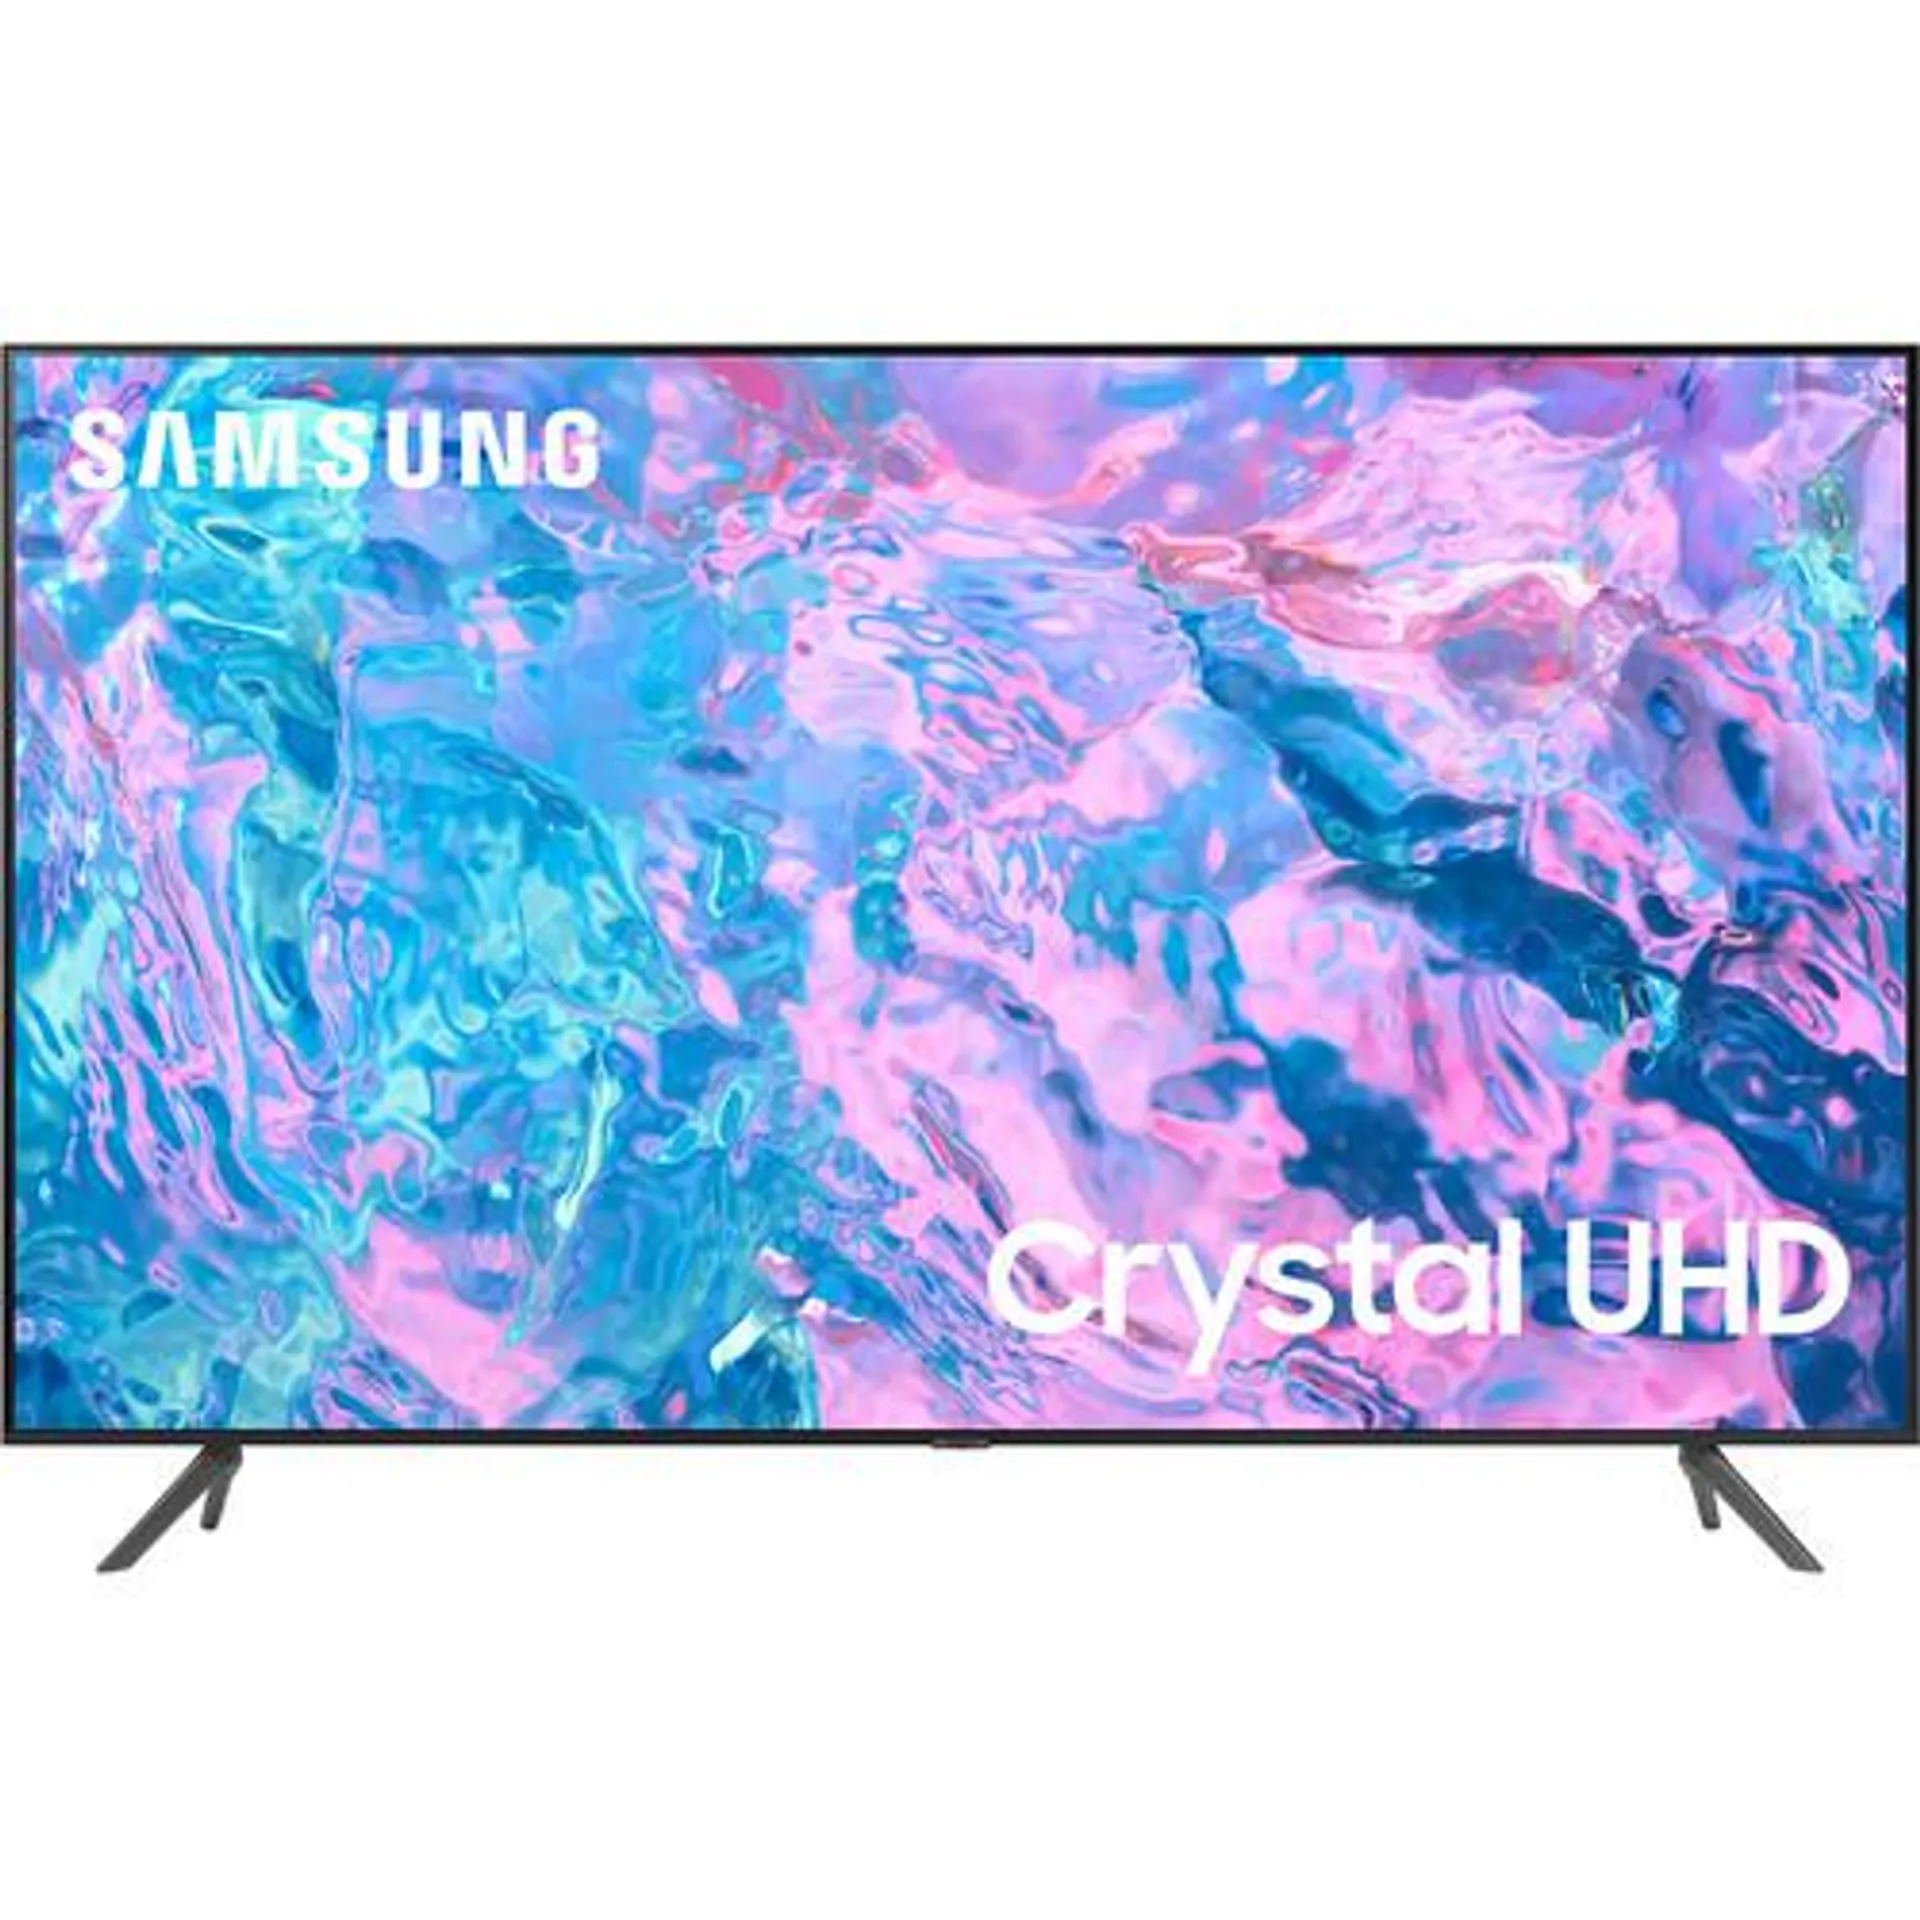 Samsung CU7000 Crystal UHD 43" 4K HDR Smart LED TV